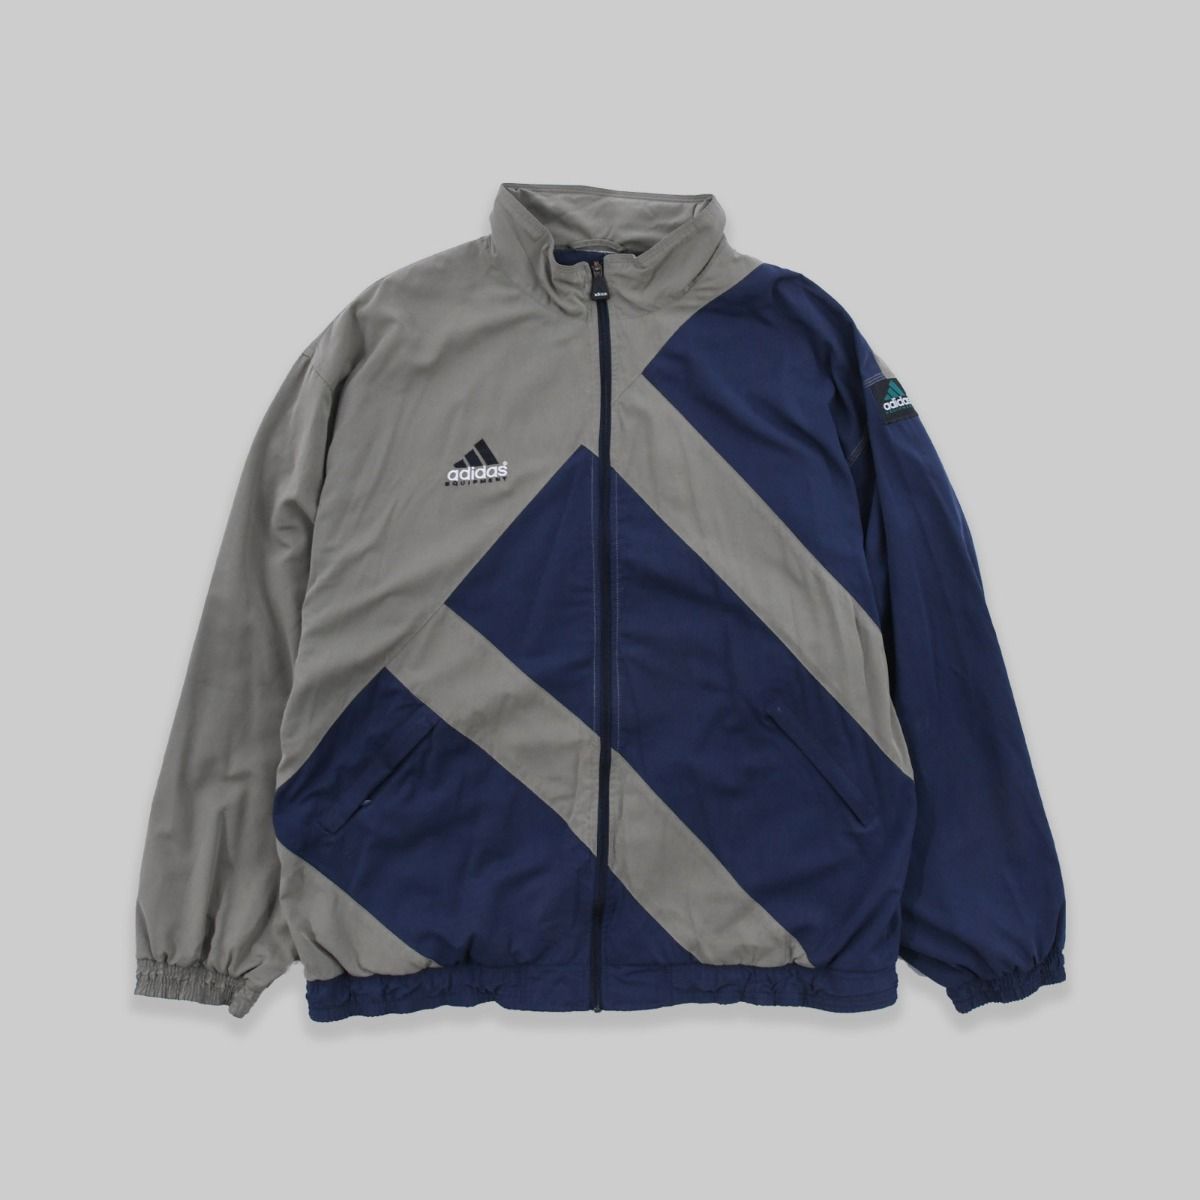 Adidas Equipment Track Jacket